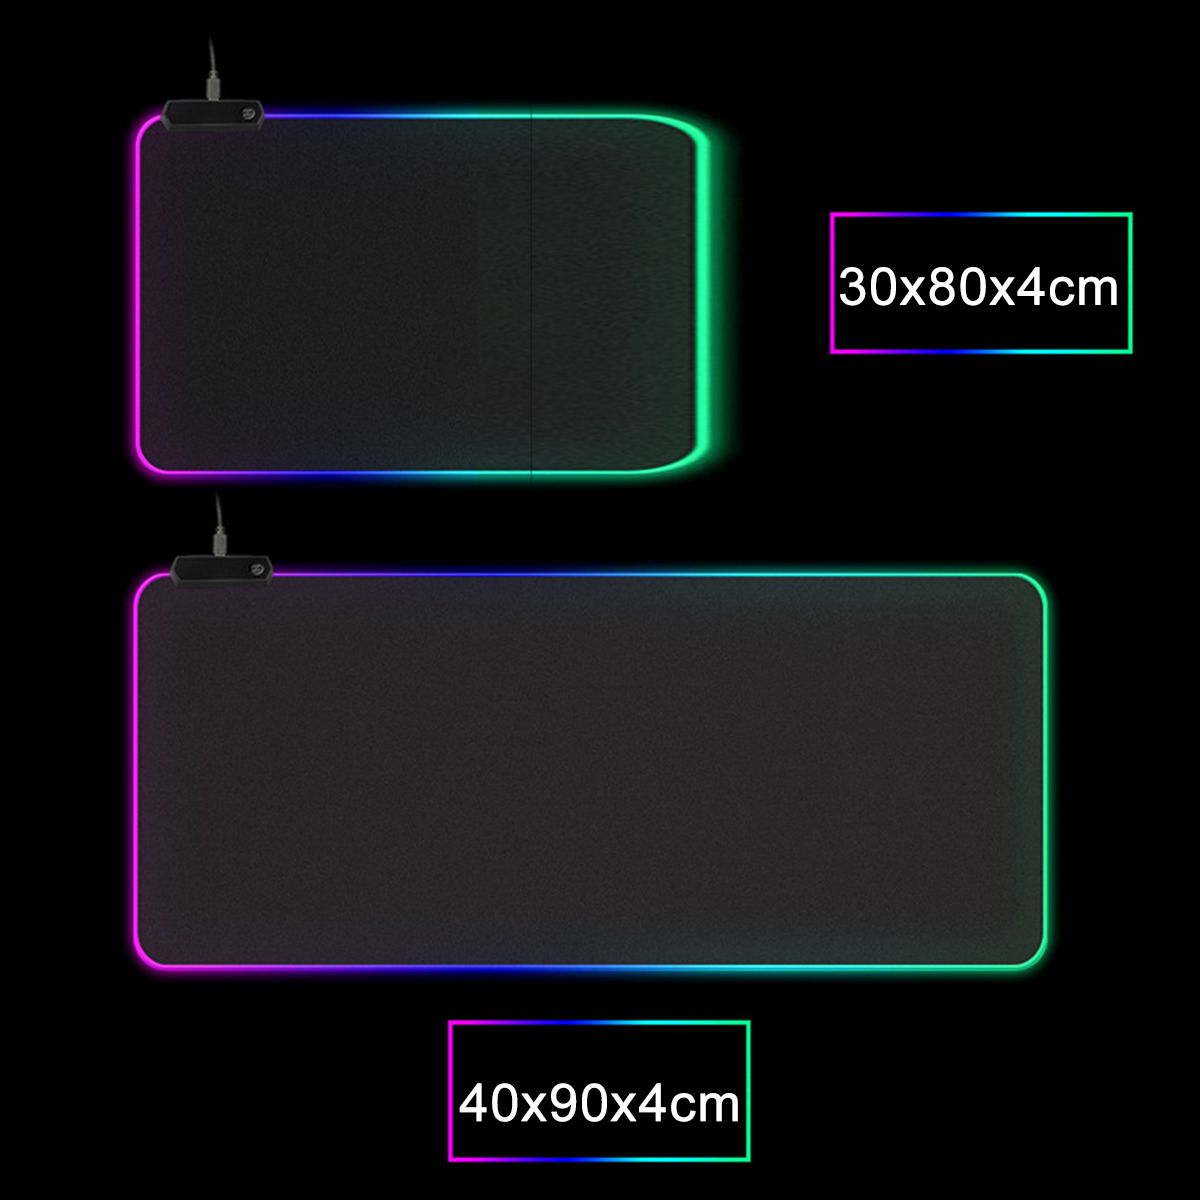 USB-LED-Gaming-Mouse-Pad-RGB-Glowing-Single-Side-Desk-Keyboard-Mat-Rubber-Antiskid-Computer-Laptop-M-1750061